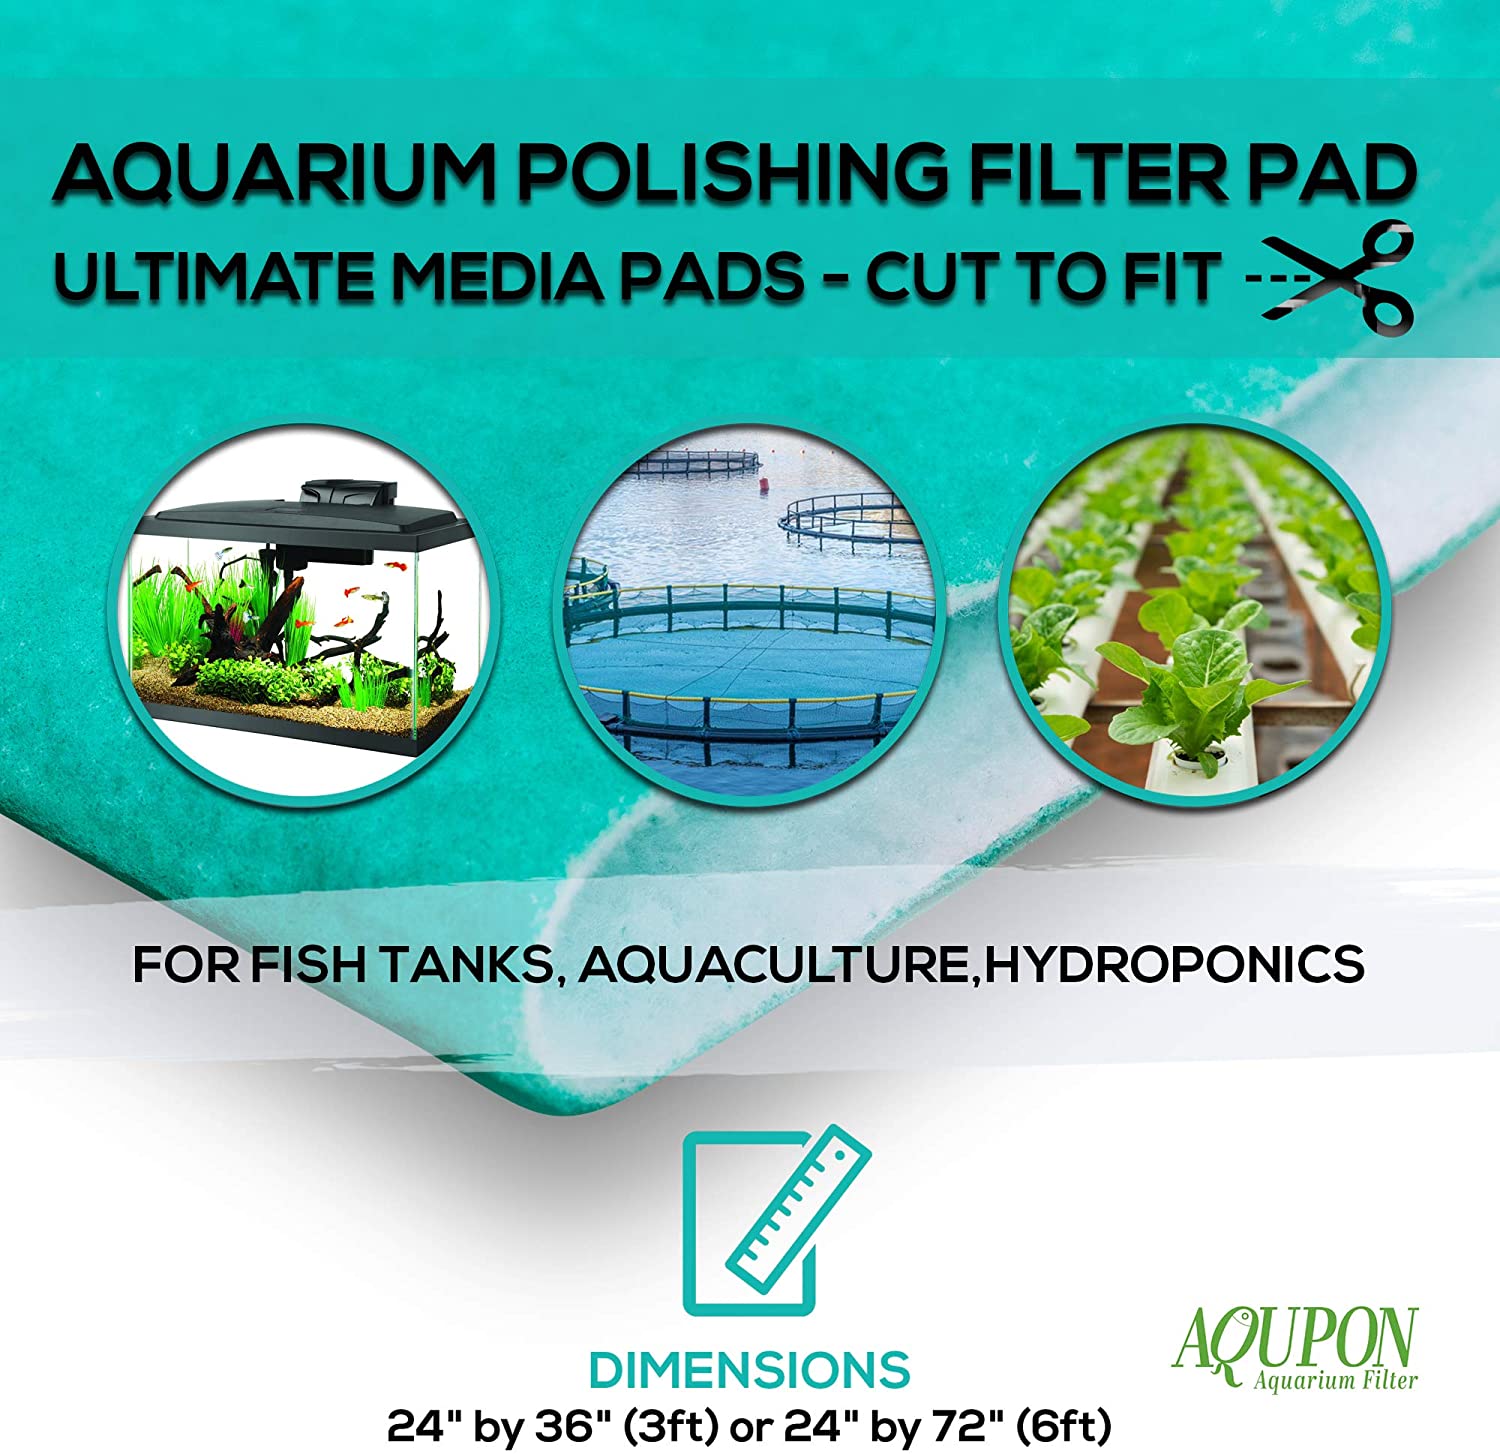 AQUPON Aquarium Polishing Filter Pad 50 Micron - Ultimate Media Pads - Cut to Fit 24" by 36" - for Fish Tanks, Aquaculture, Hydroponics - USA Manufacturer